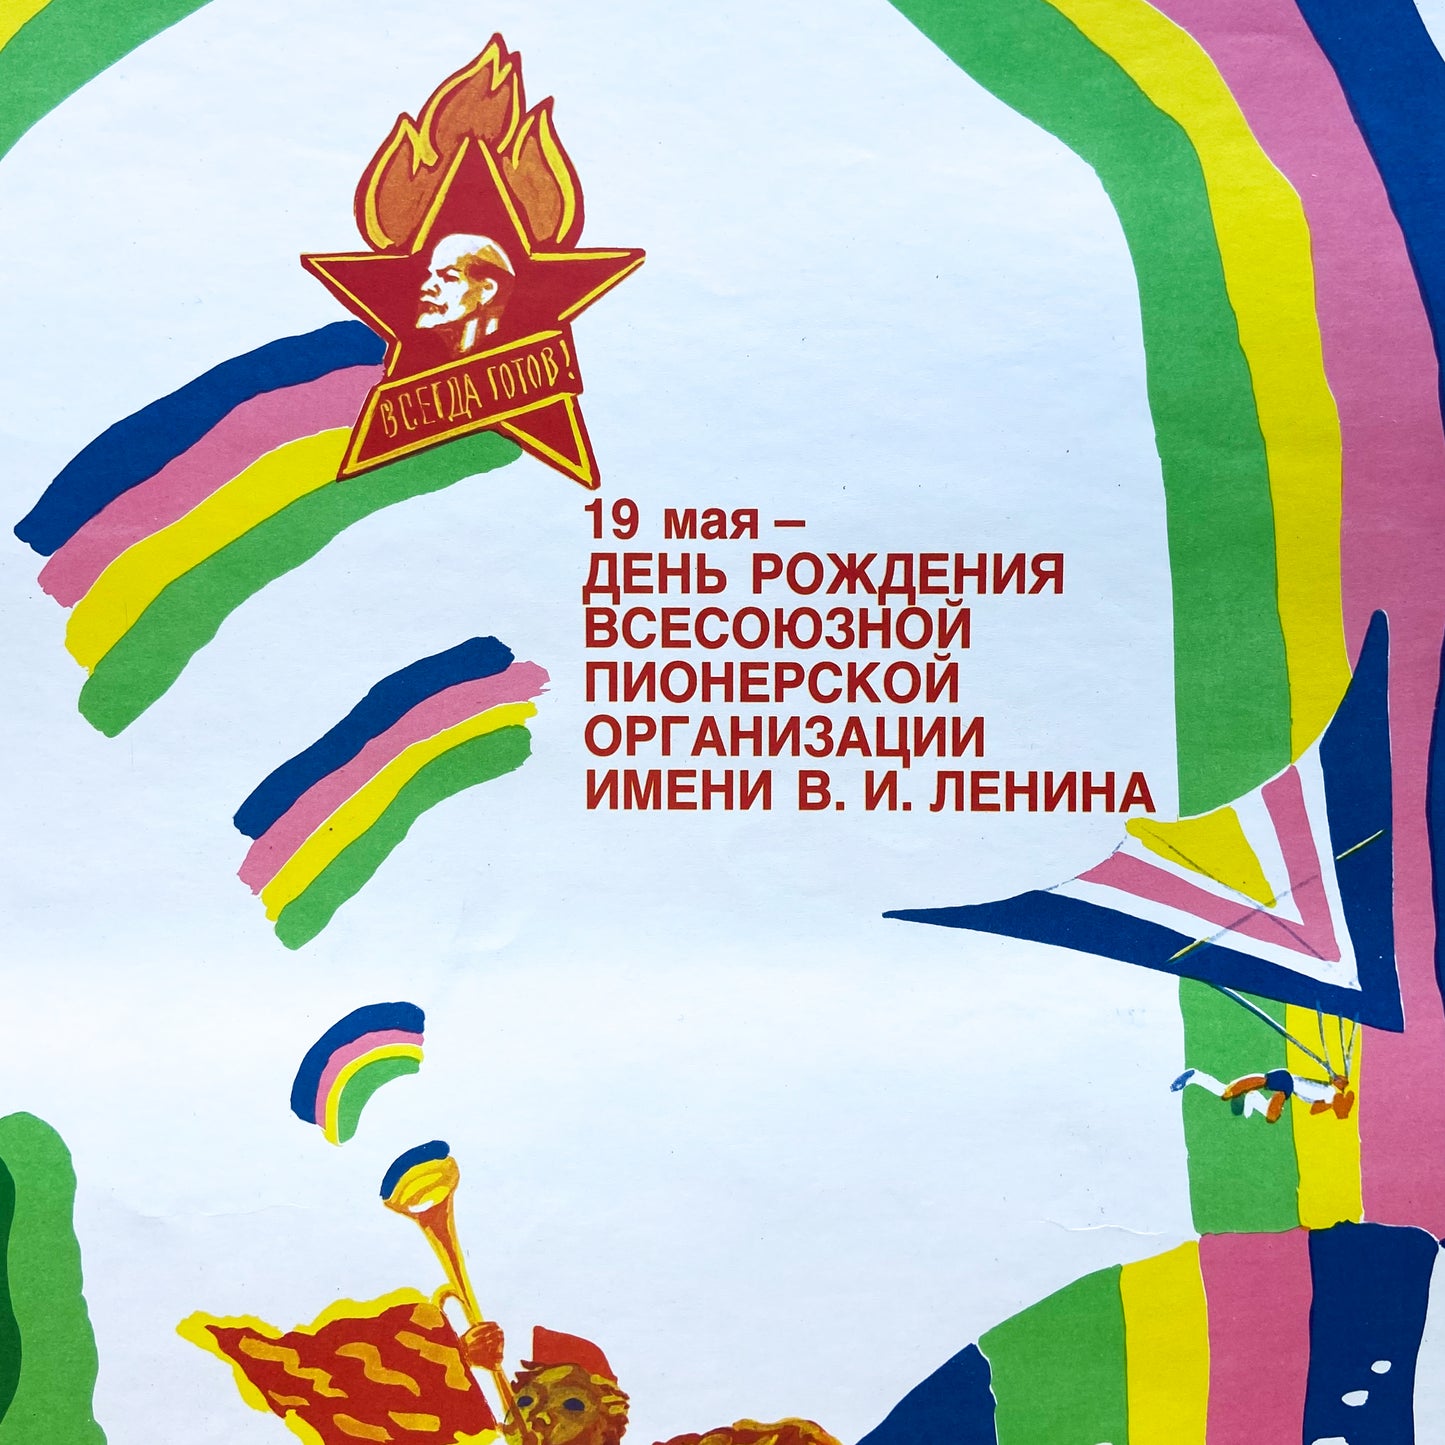 1980s Soviet Propaganda Poster #P1117 - 17" x 22"